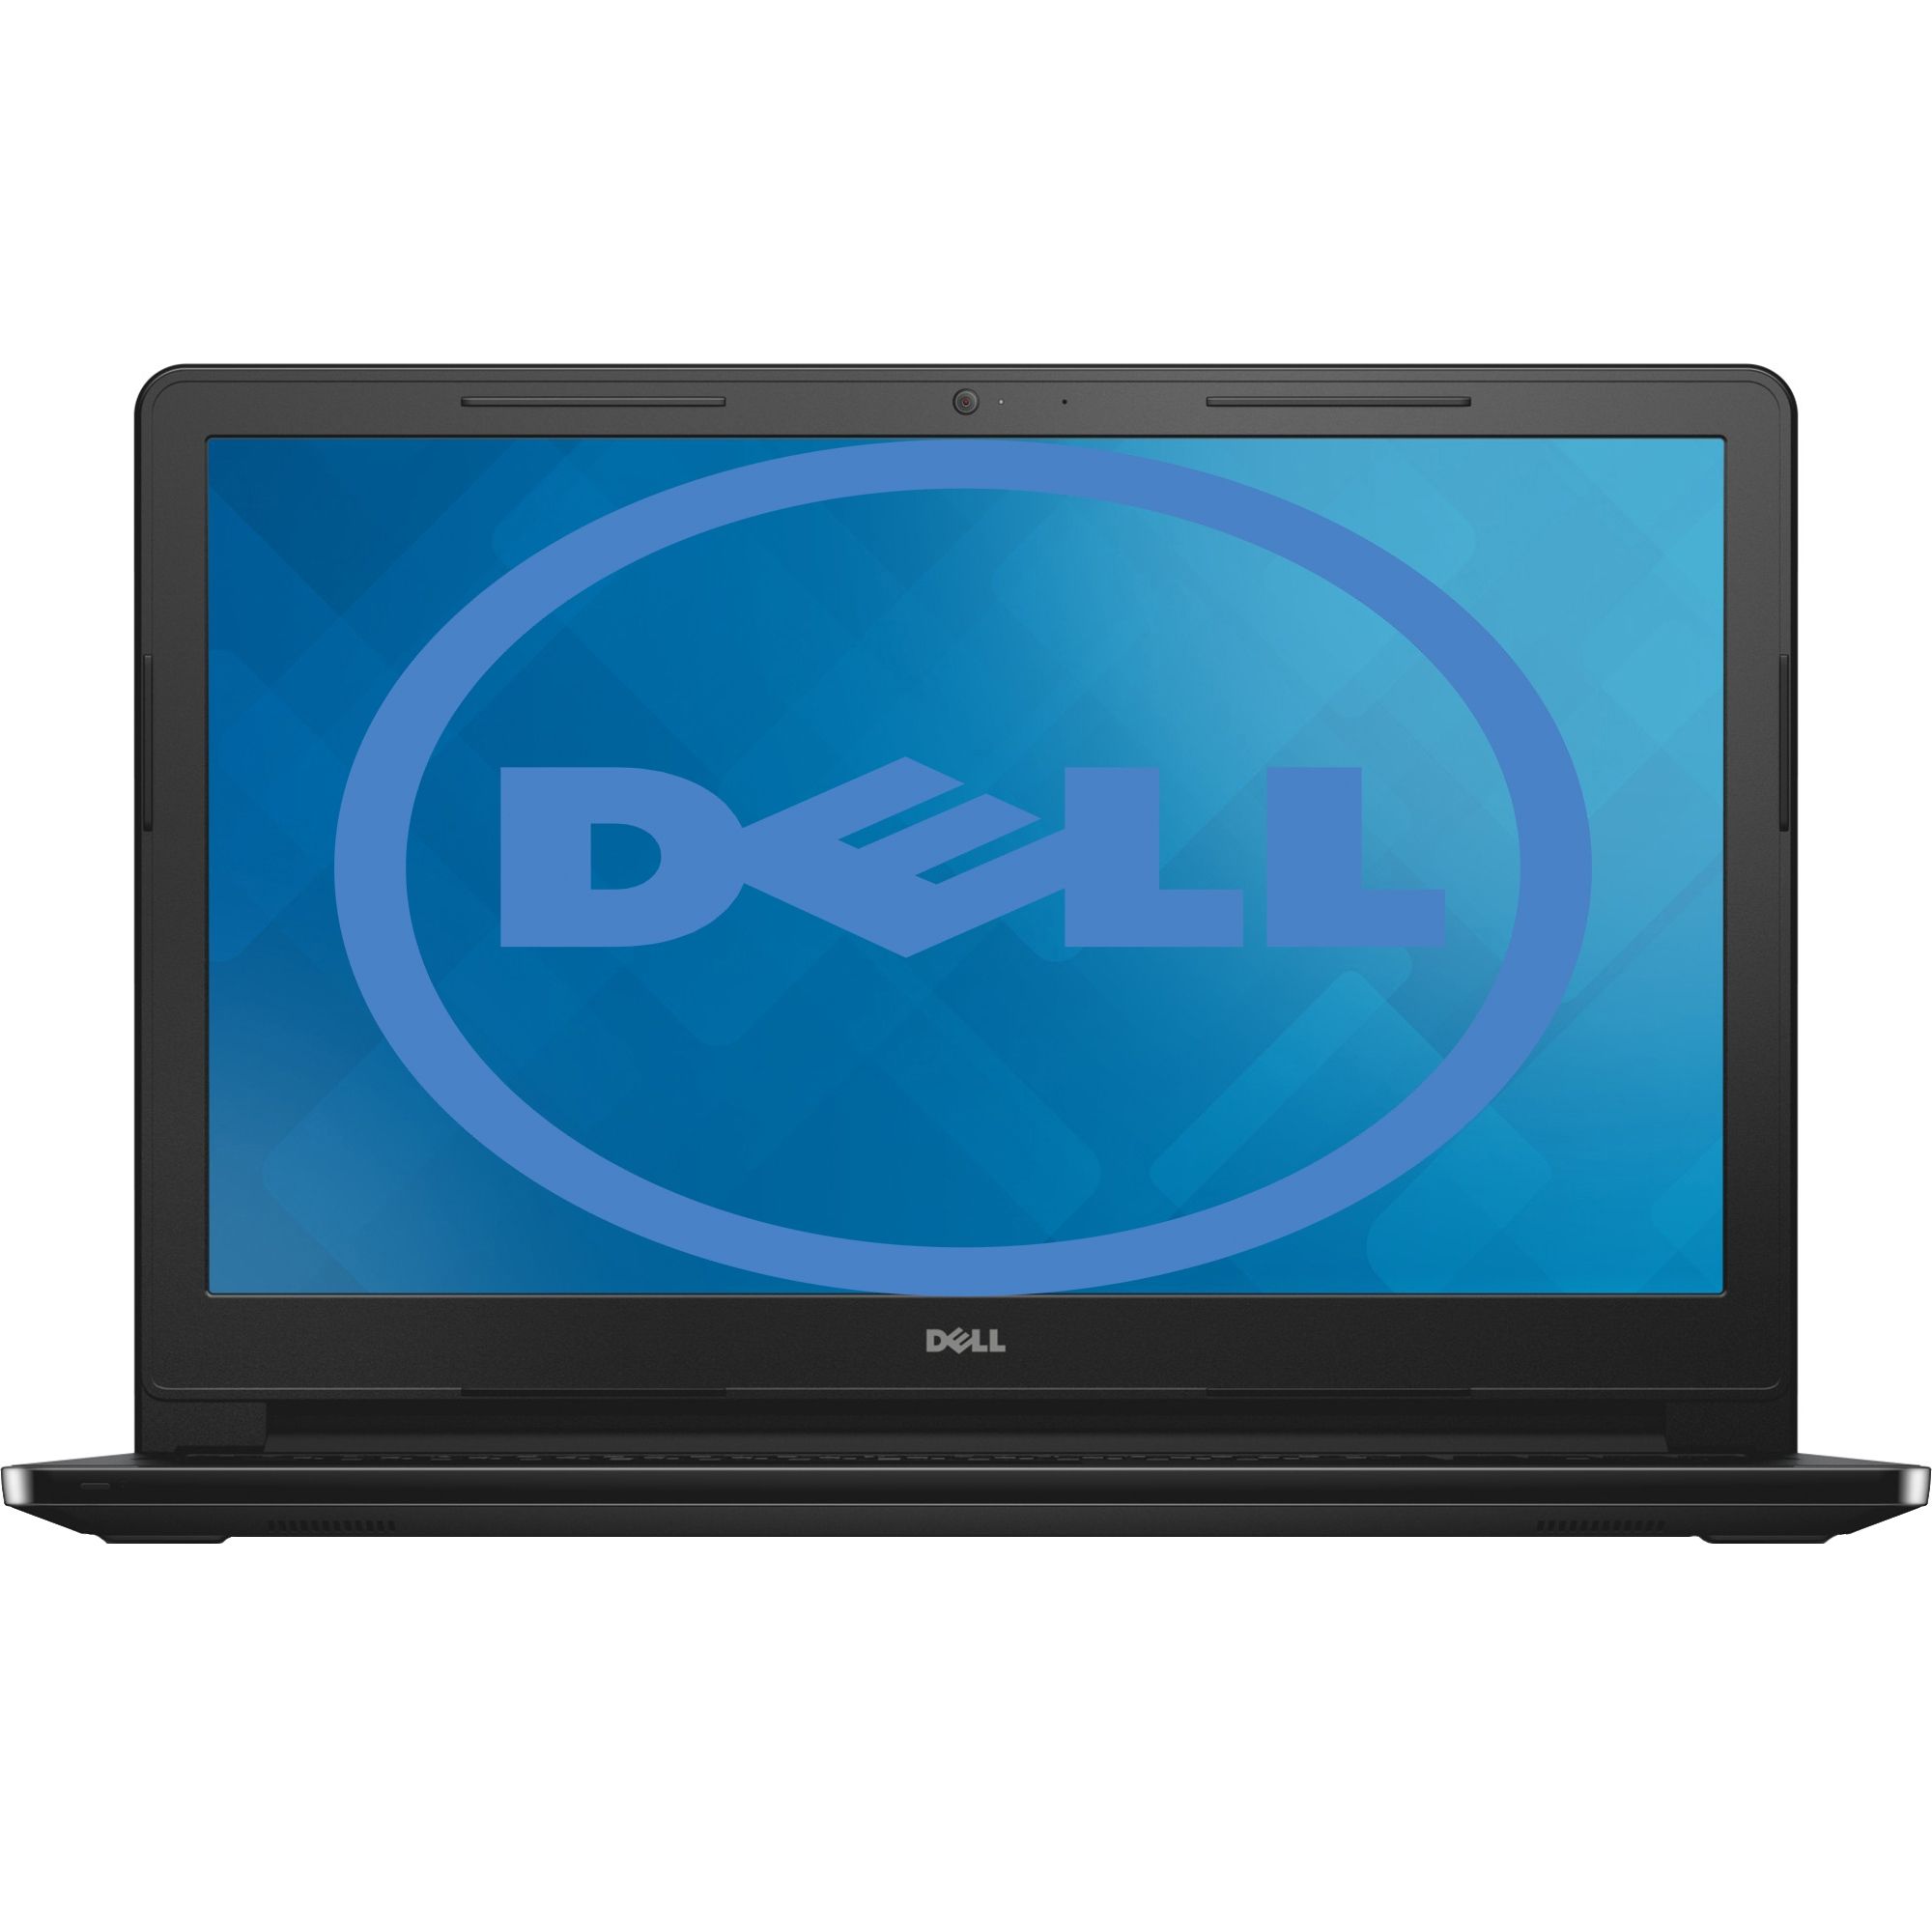  Laptop Dell Inspiron 3552, Intel Pentium N3700, 4GB DDR3, HDD 500GB, Intel HD Graphics, Linux 